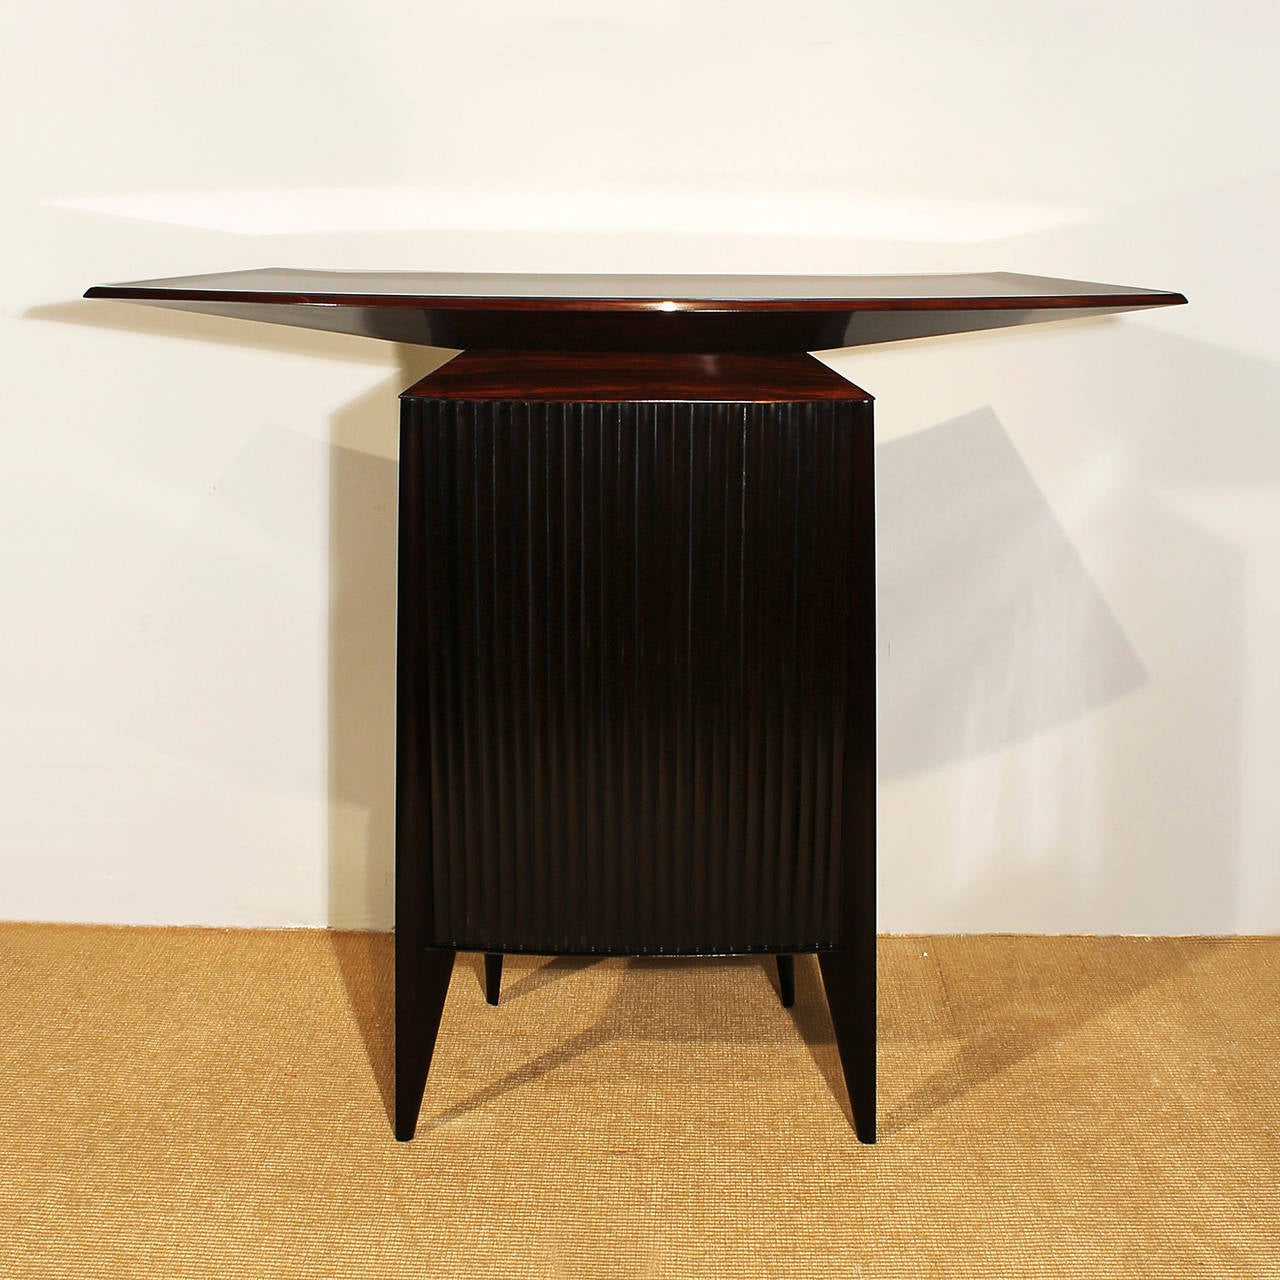 Set of bar counter and two bar stools. Counter in mahogany and rosewood veneer, French polish, black 